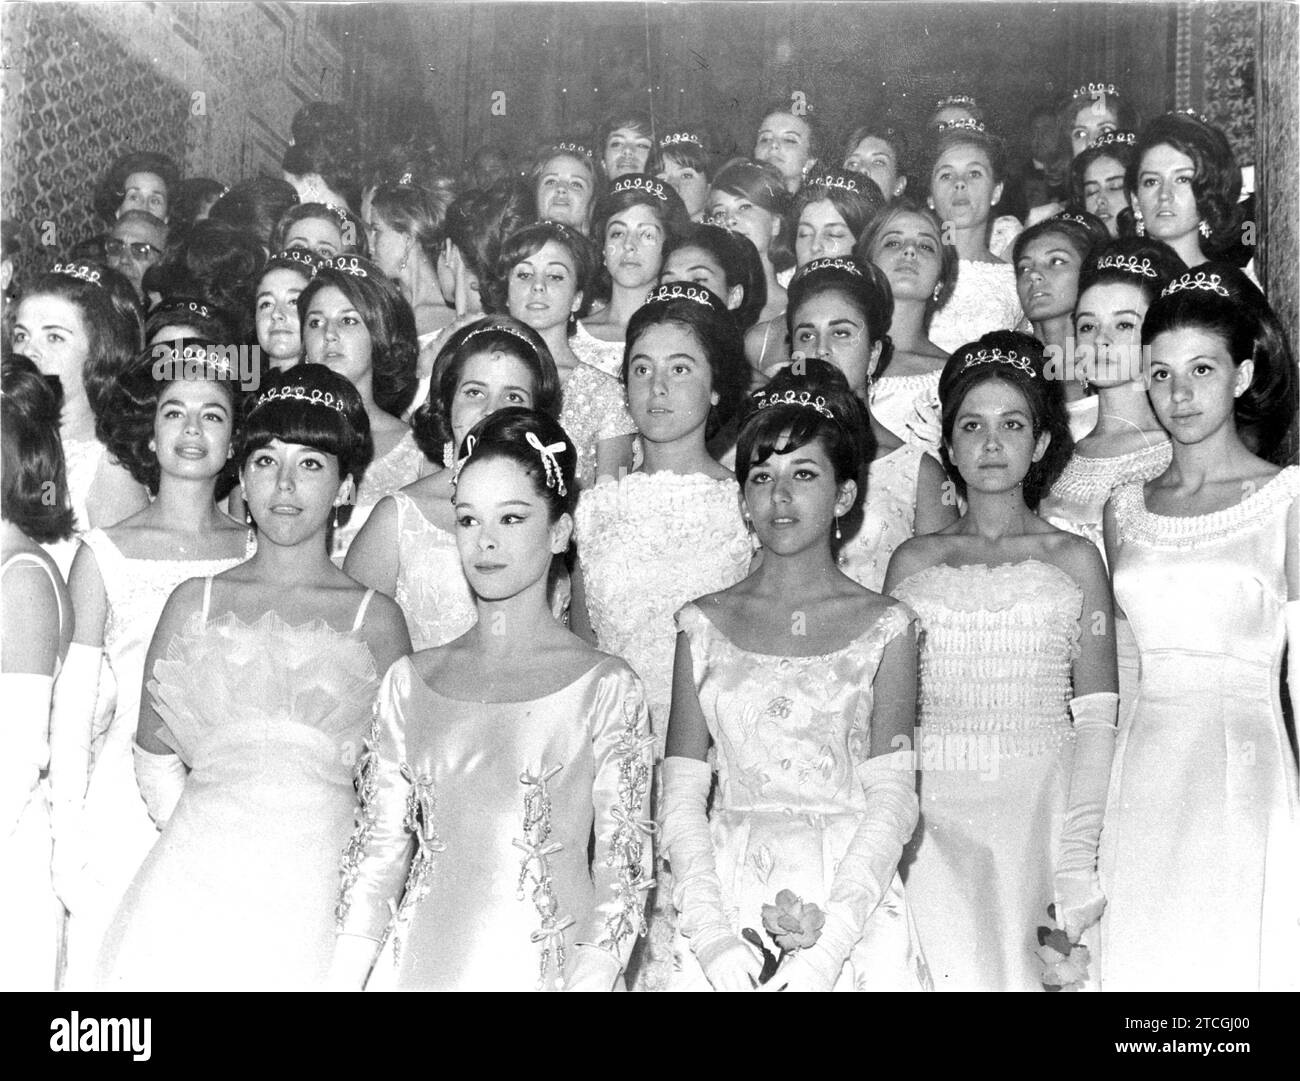 04/18/1964. Dance of the Debutantes in the house of Pilatos, palace of the Dukes of Medinaceli. Credit: Album / Archivo ABC / Álvaro García Pelayo Stock Photo